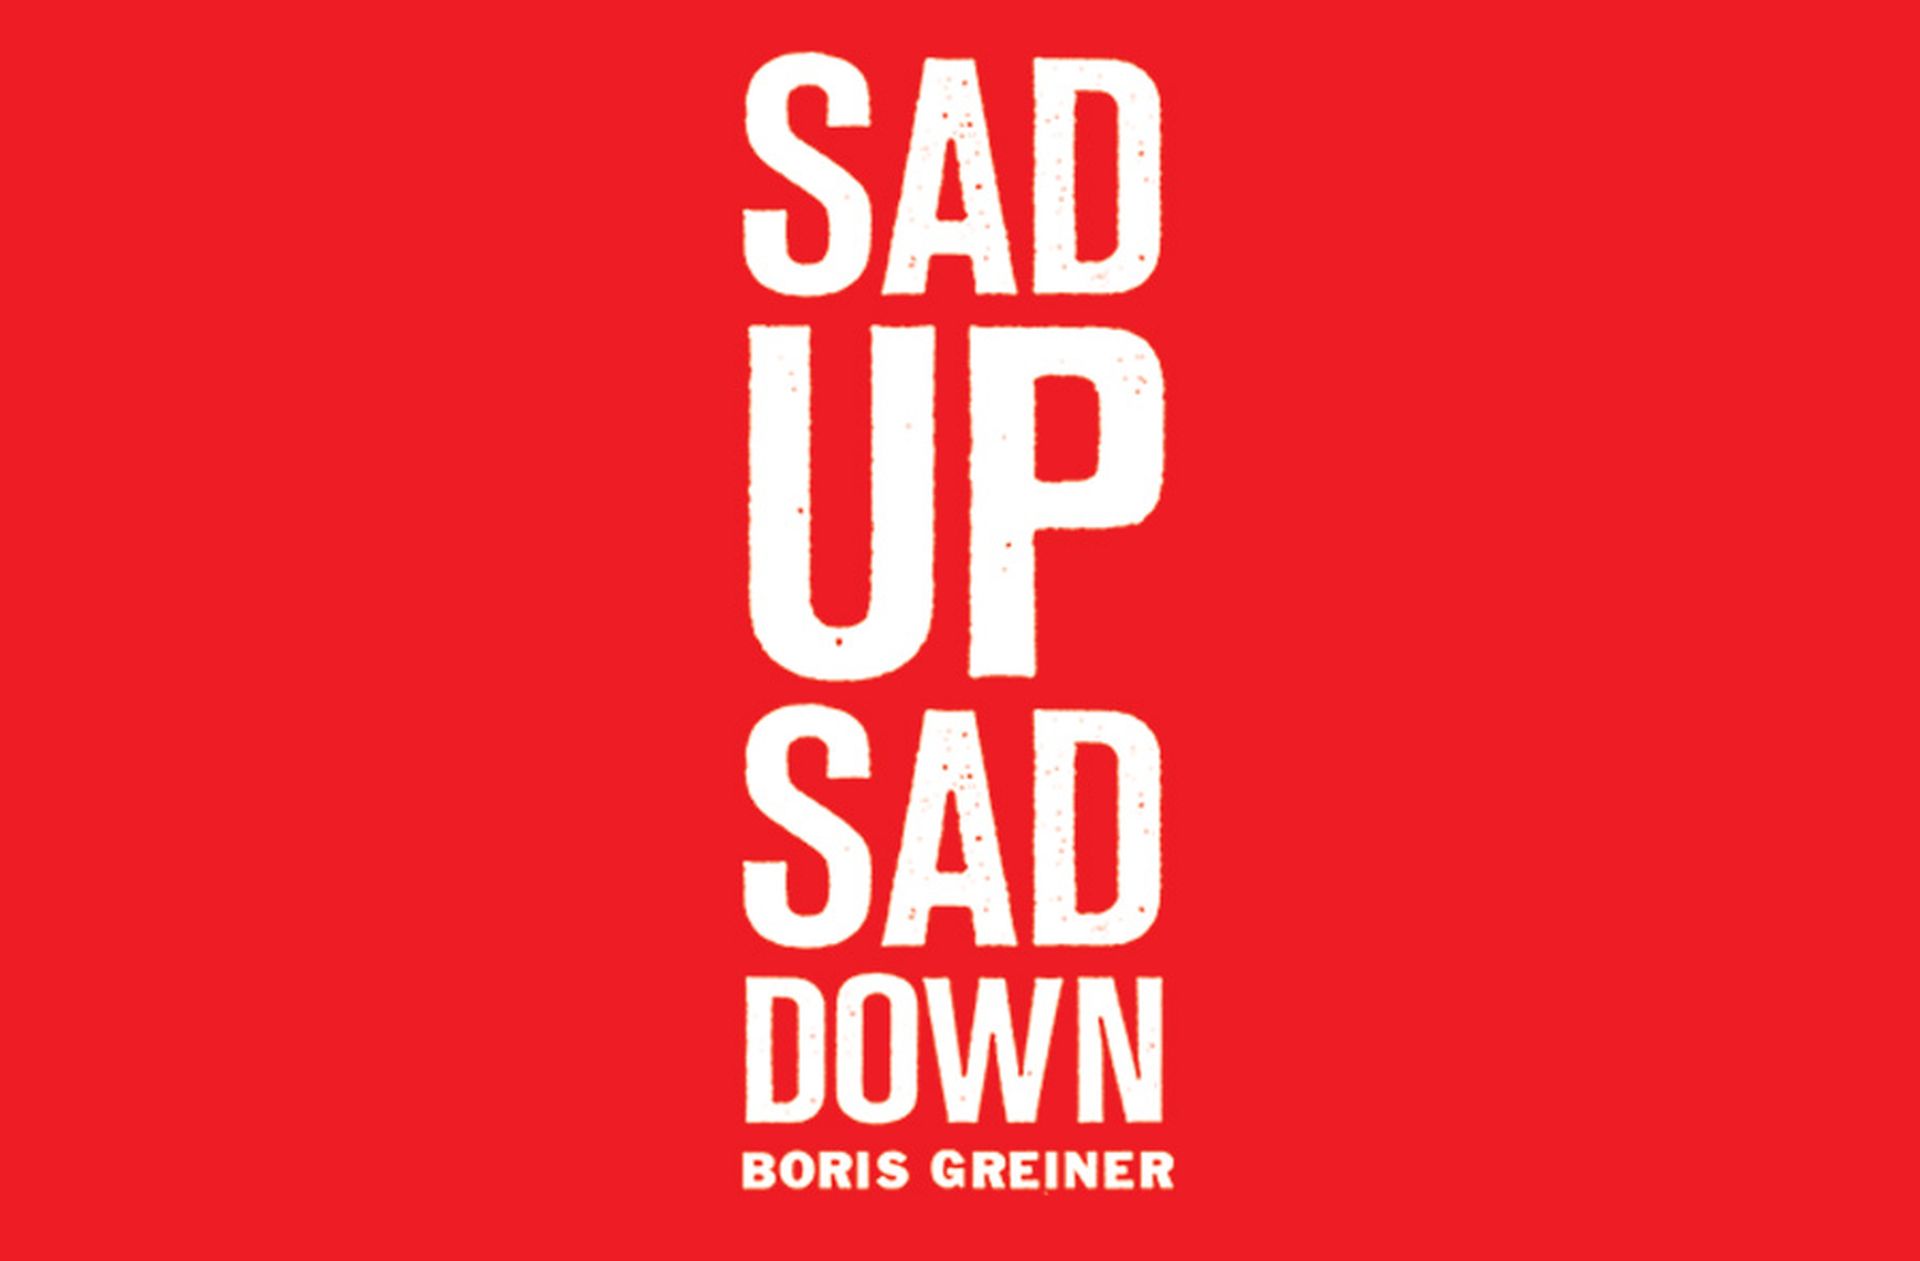 Izložba “Sad Up Sad Down” Borisa Greinera u HDD galeriji